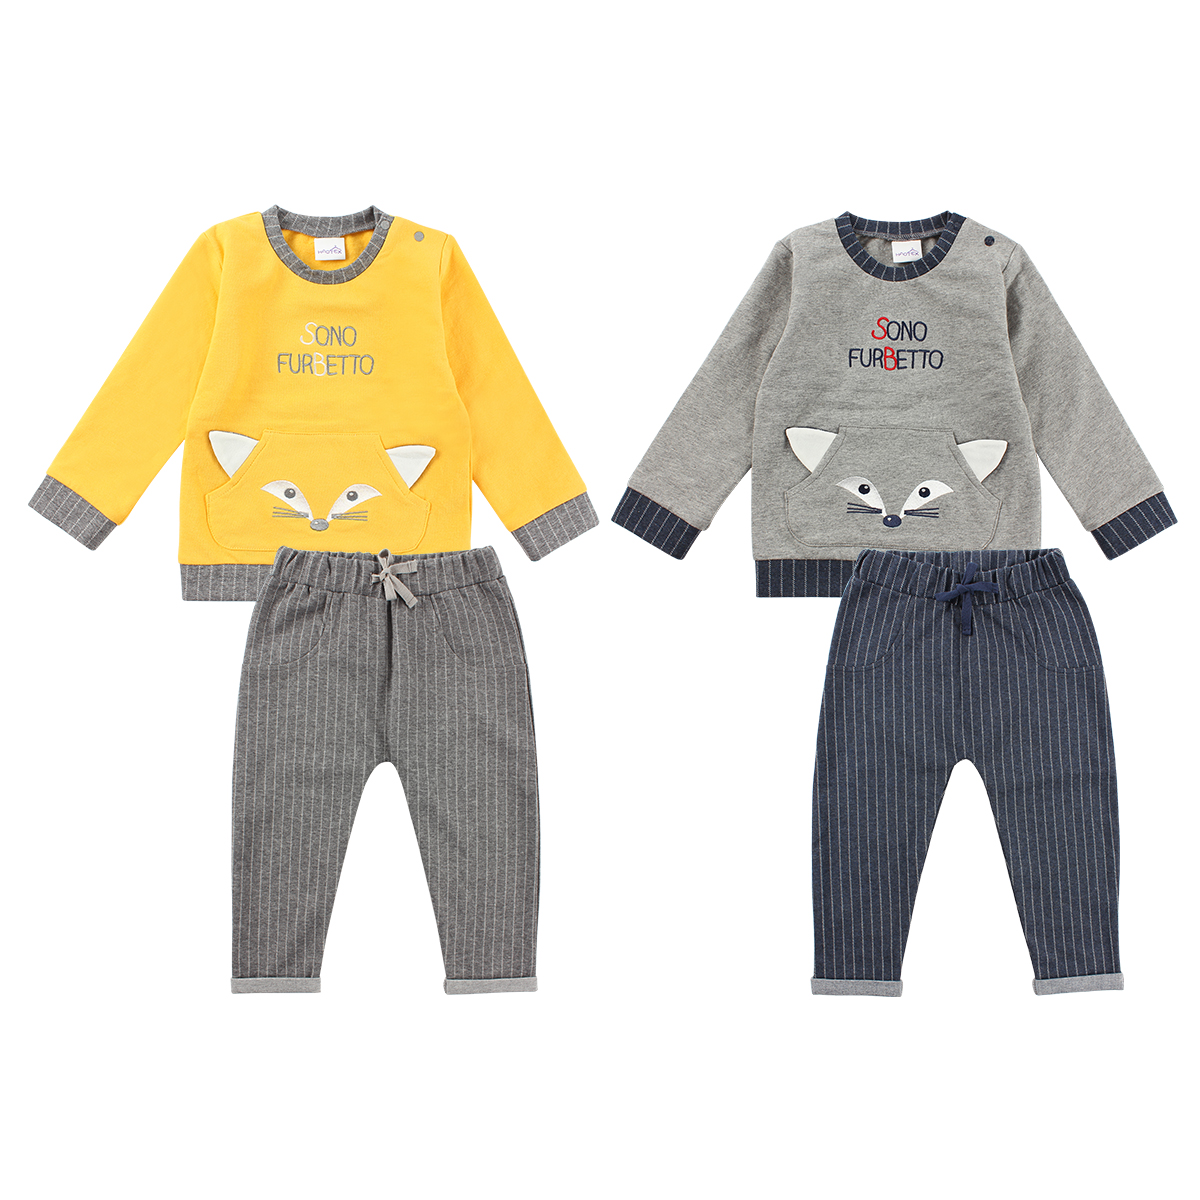 CO 4873 Safe Newborn Baby Clothes Sets